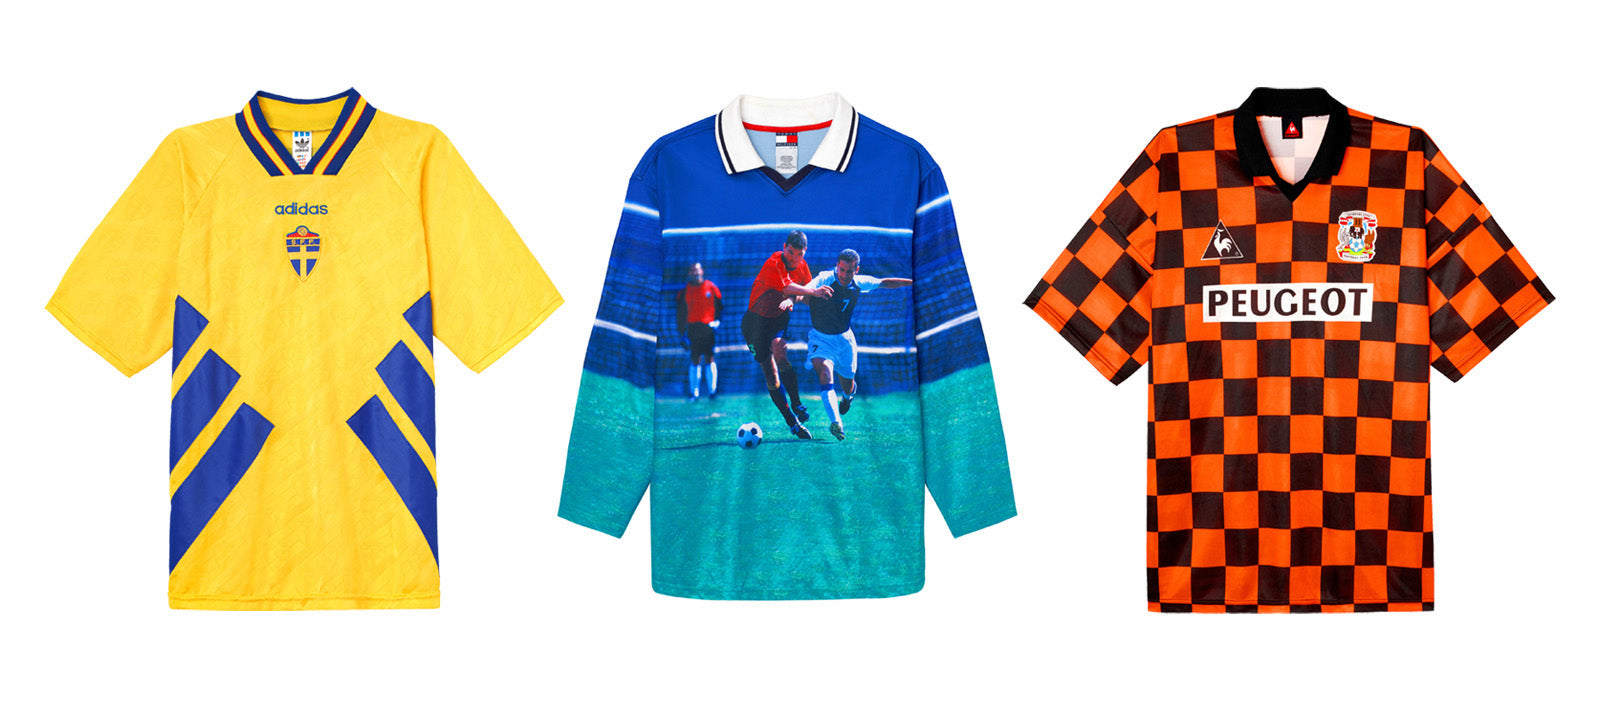 Invitation: Foosball and Football Jerseys (Rare and vintage soccer jerseys curated by Josh Matthews)